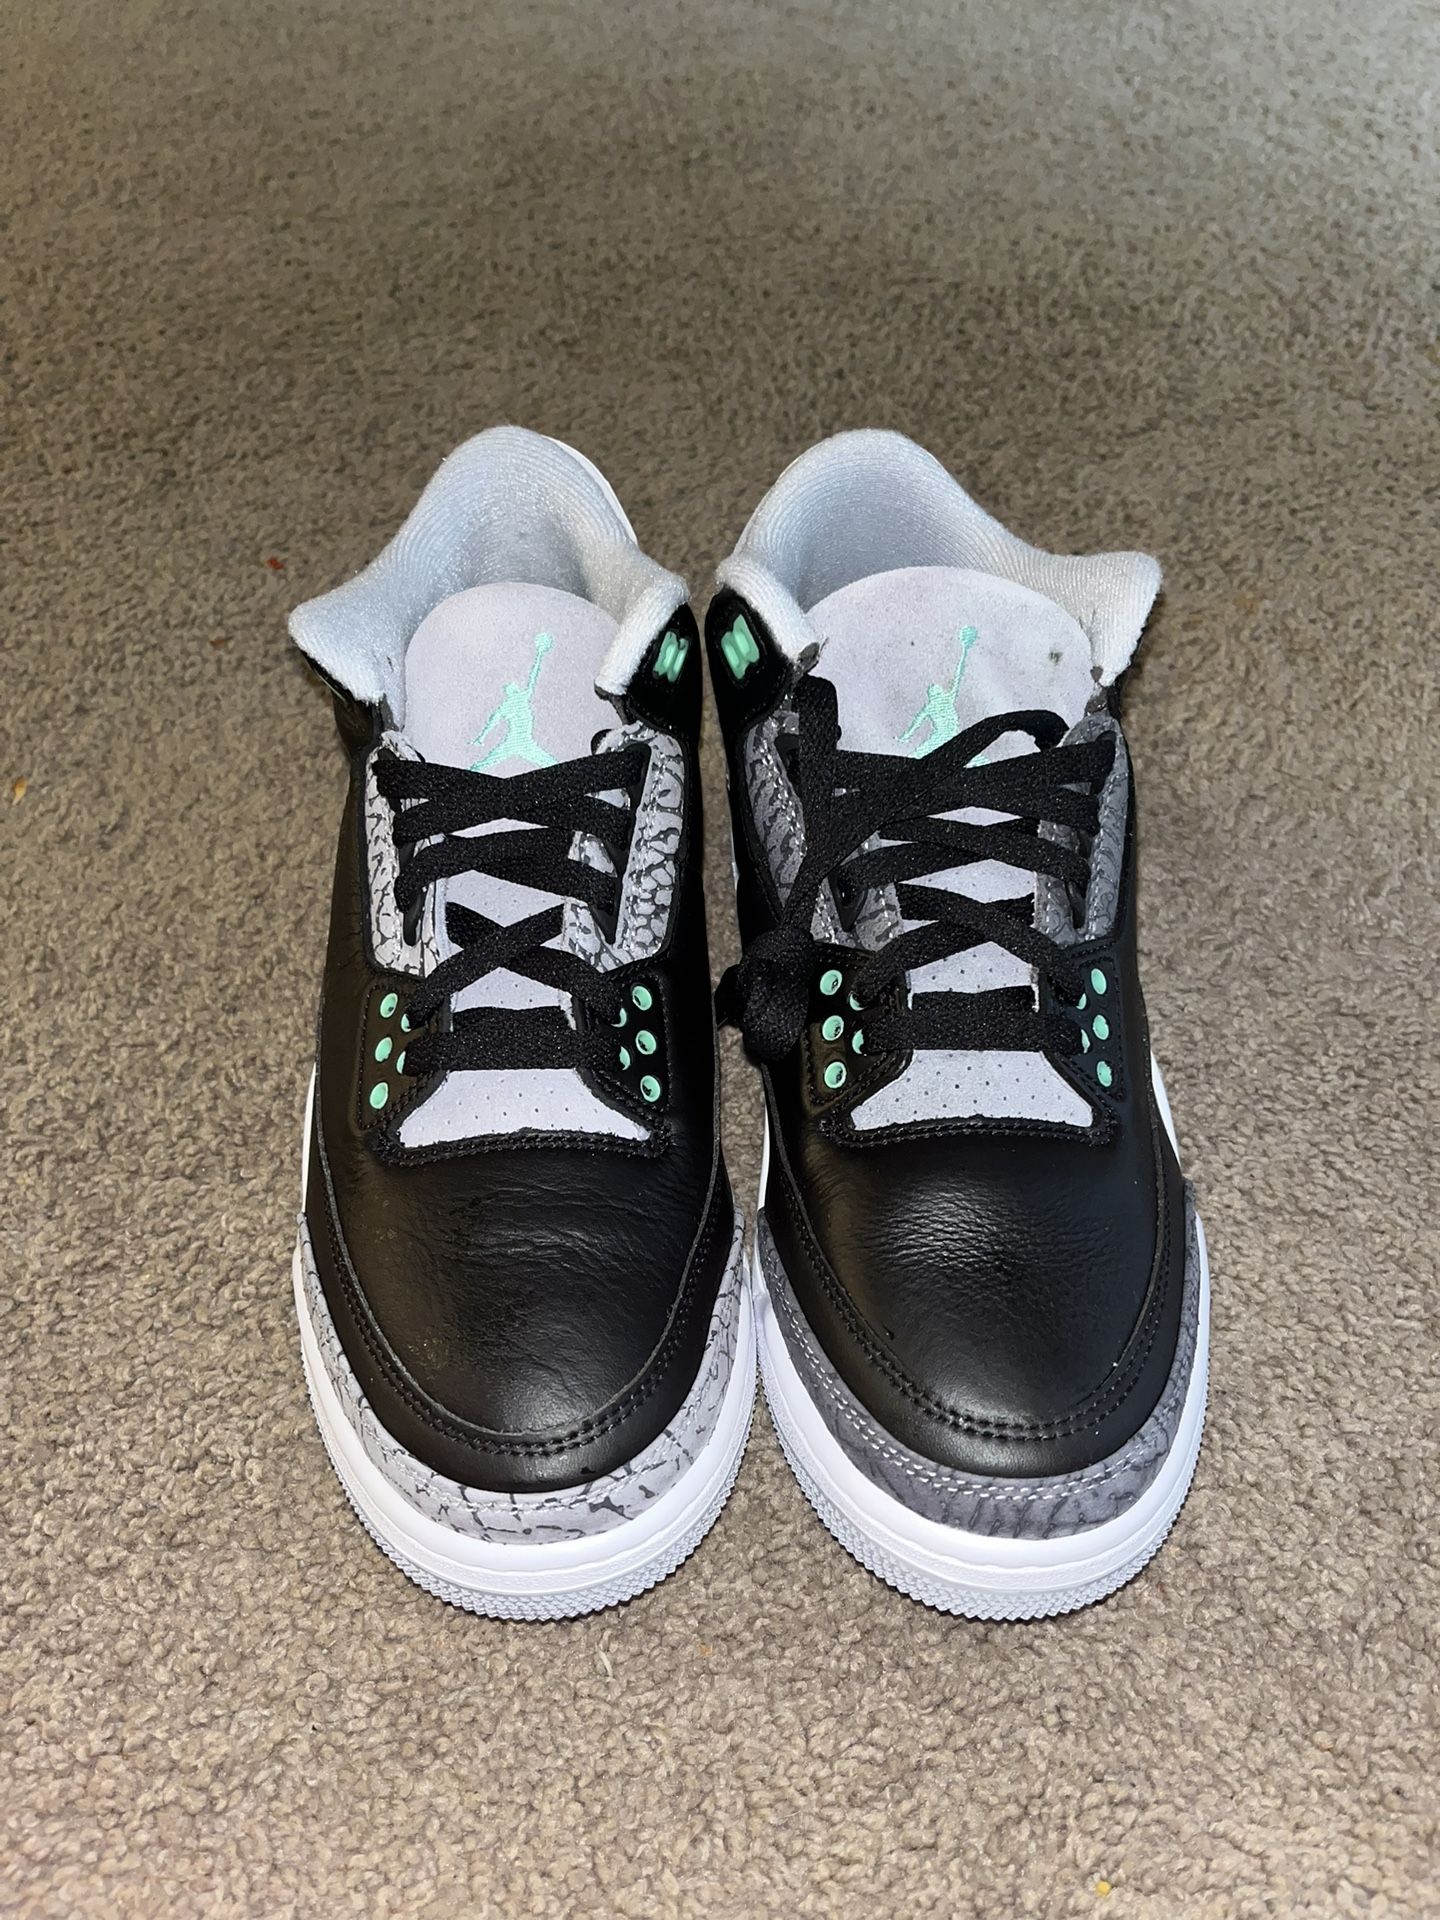 Air Jordan 3 Retro "Green Glow" Mens Size 8